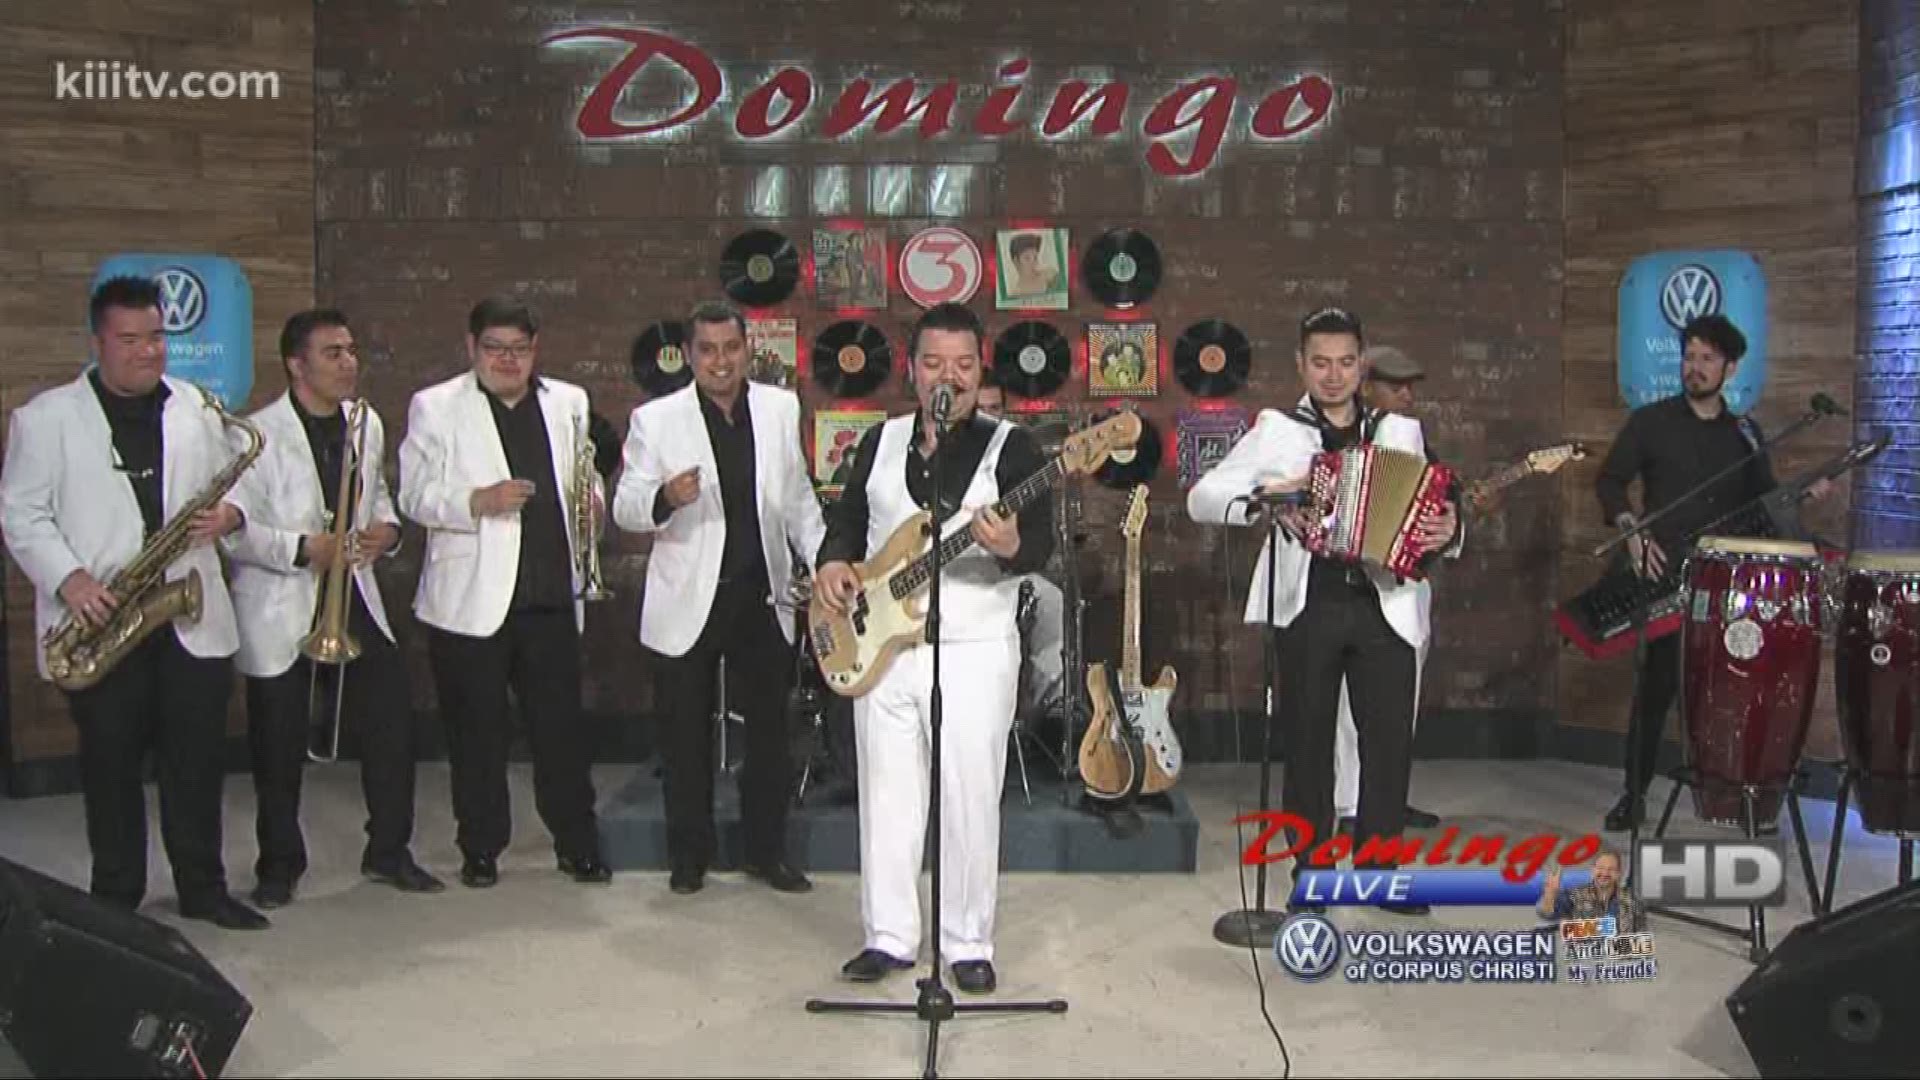 La 45 performing "Como Me Alegro" on Domingo Live!